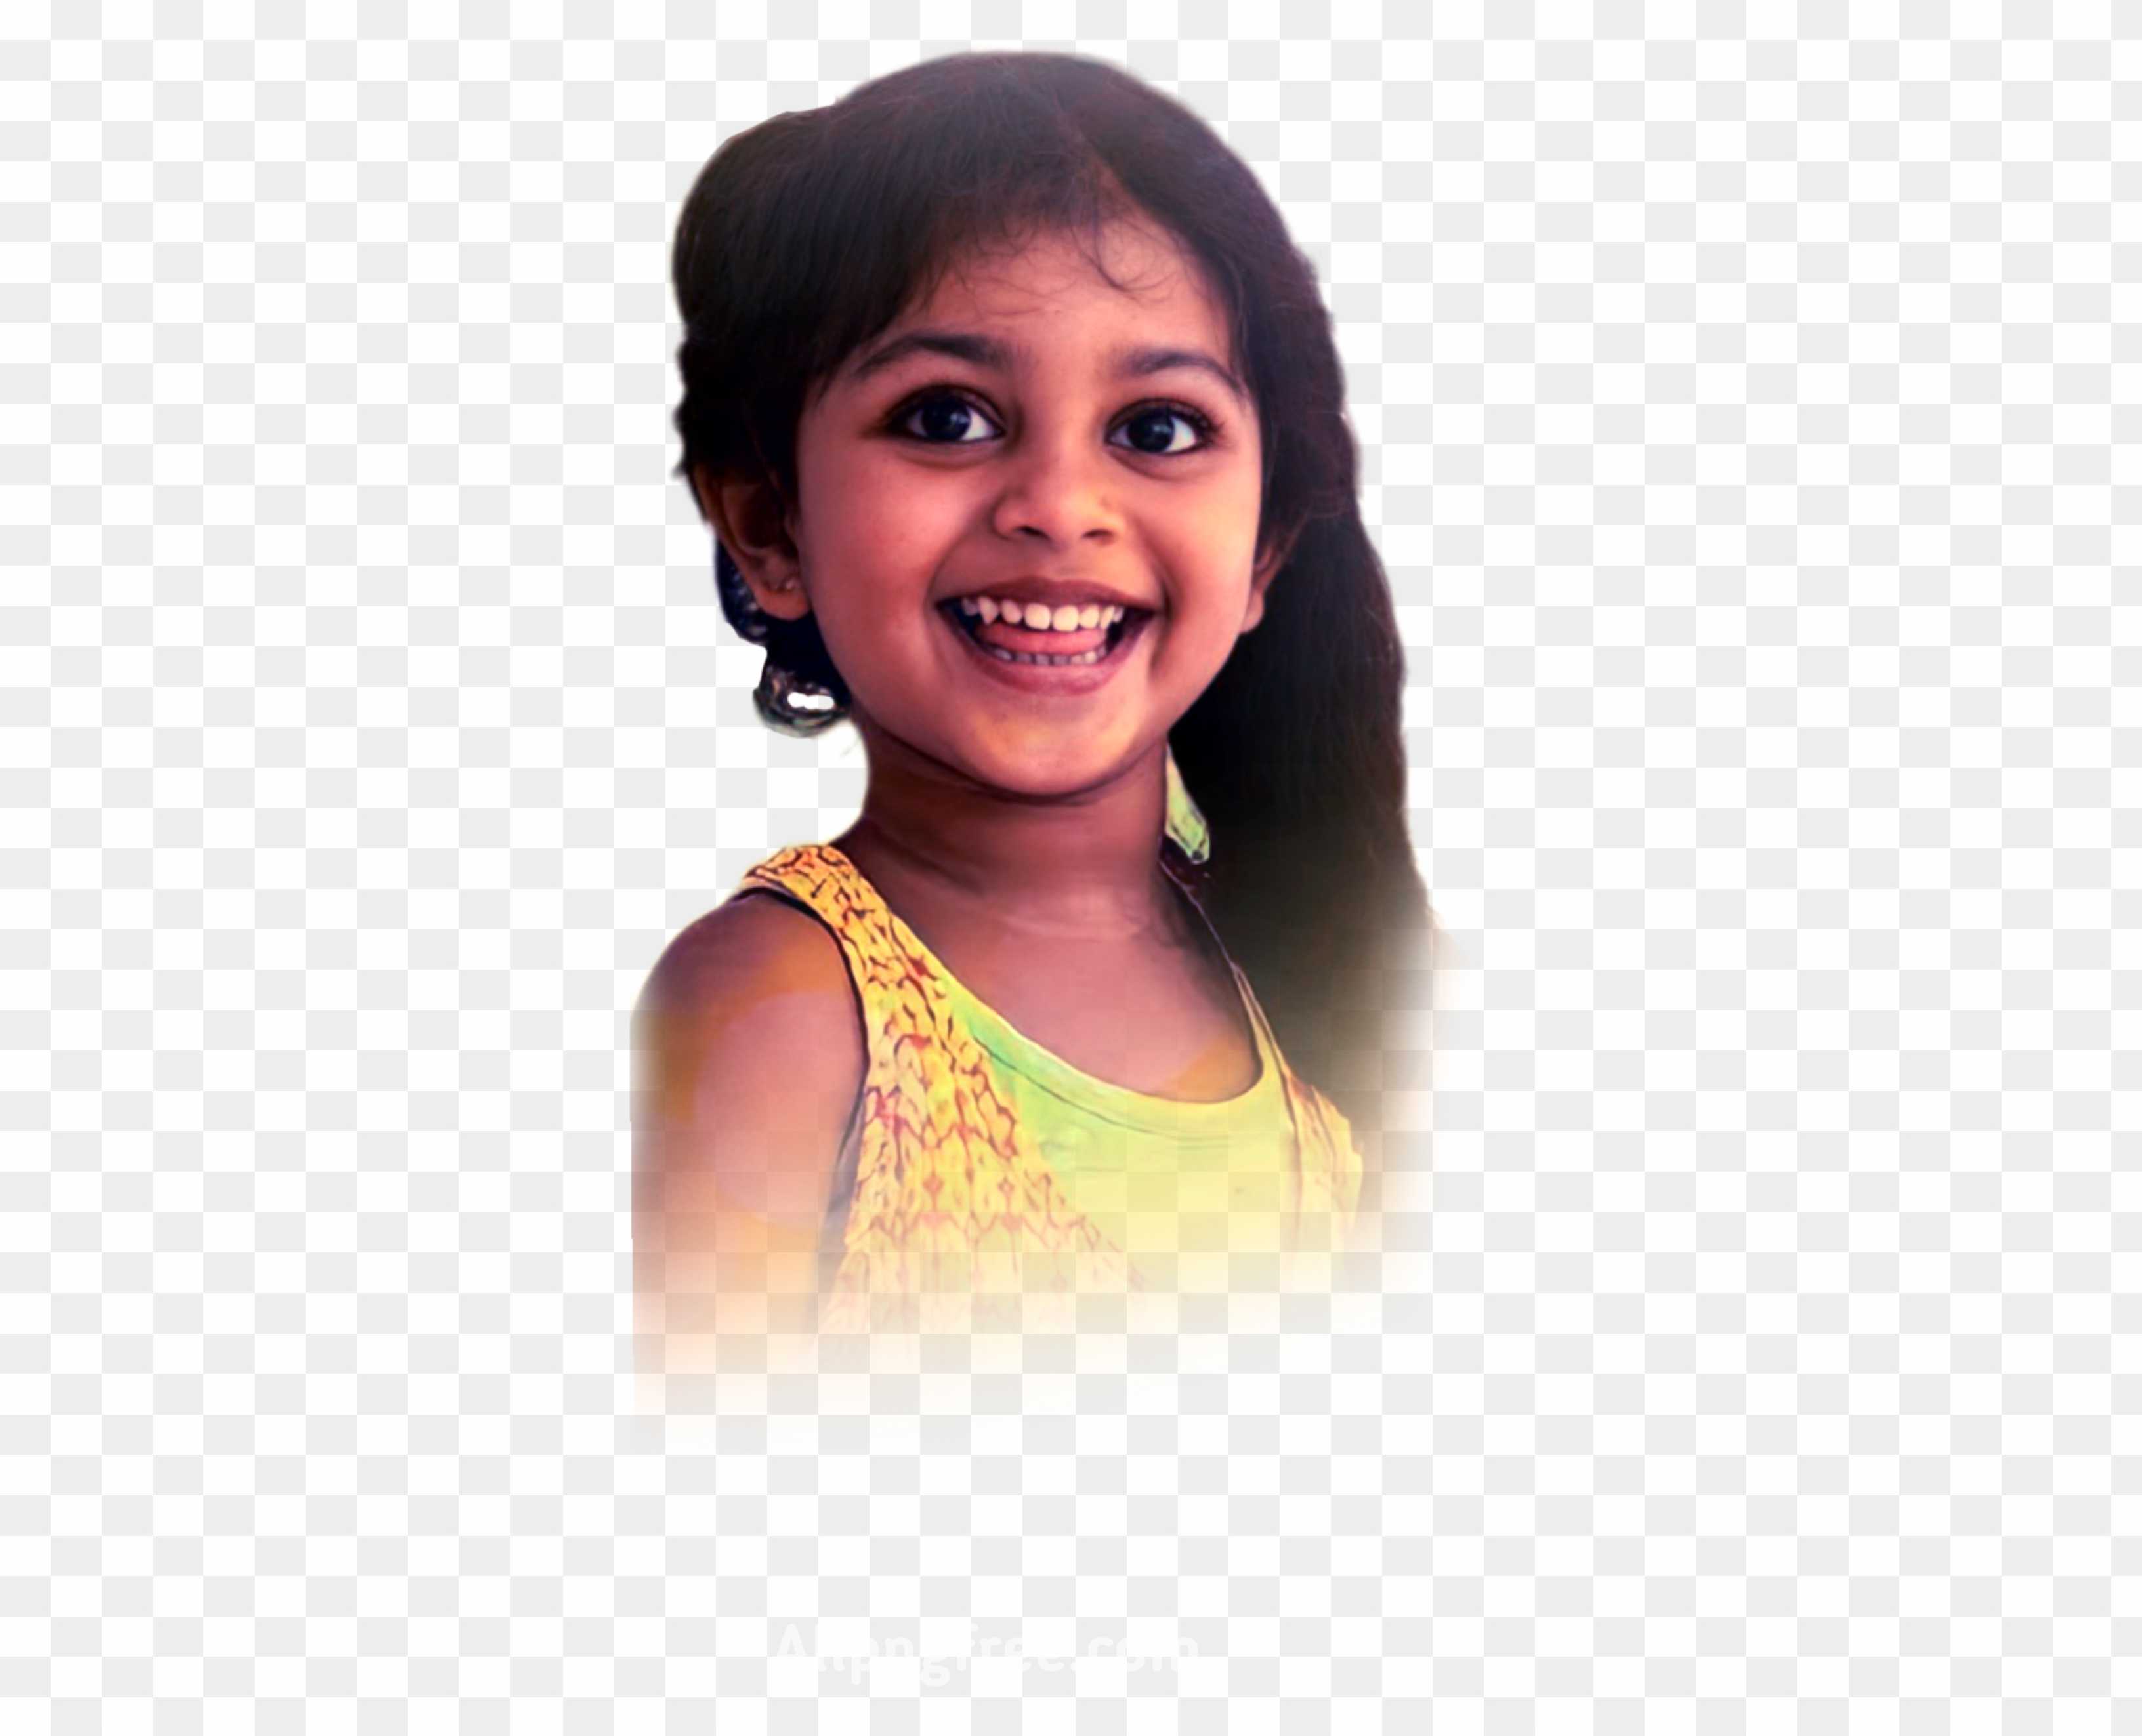 Indian cute children girl png